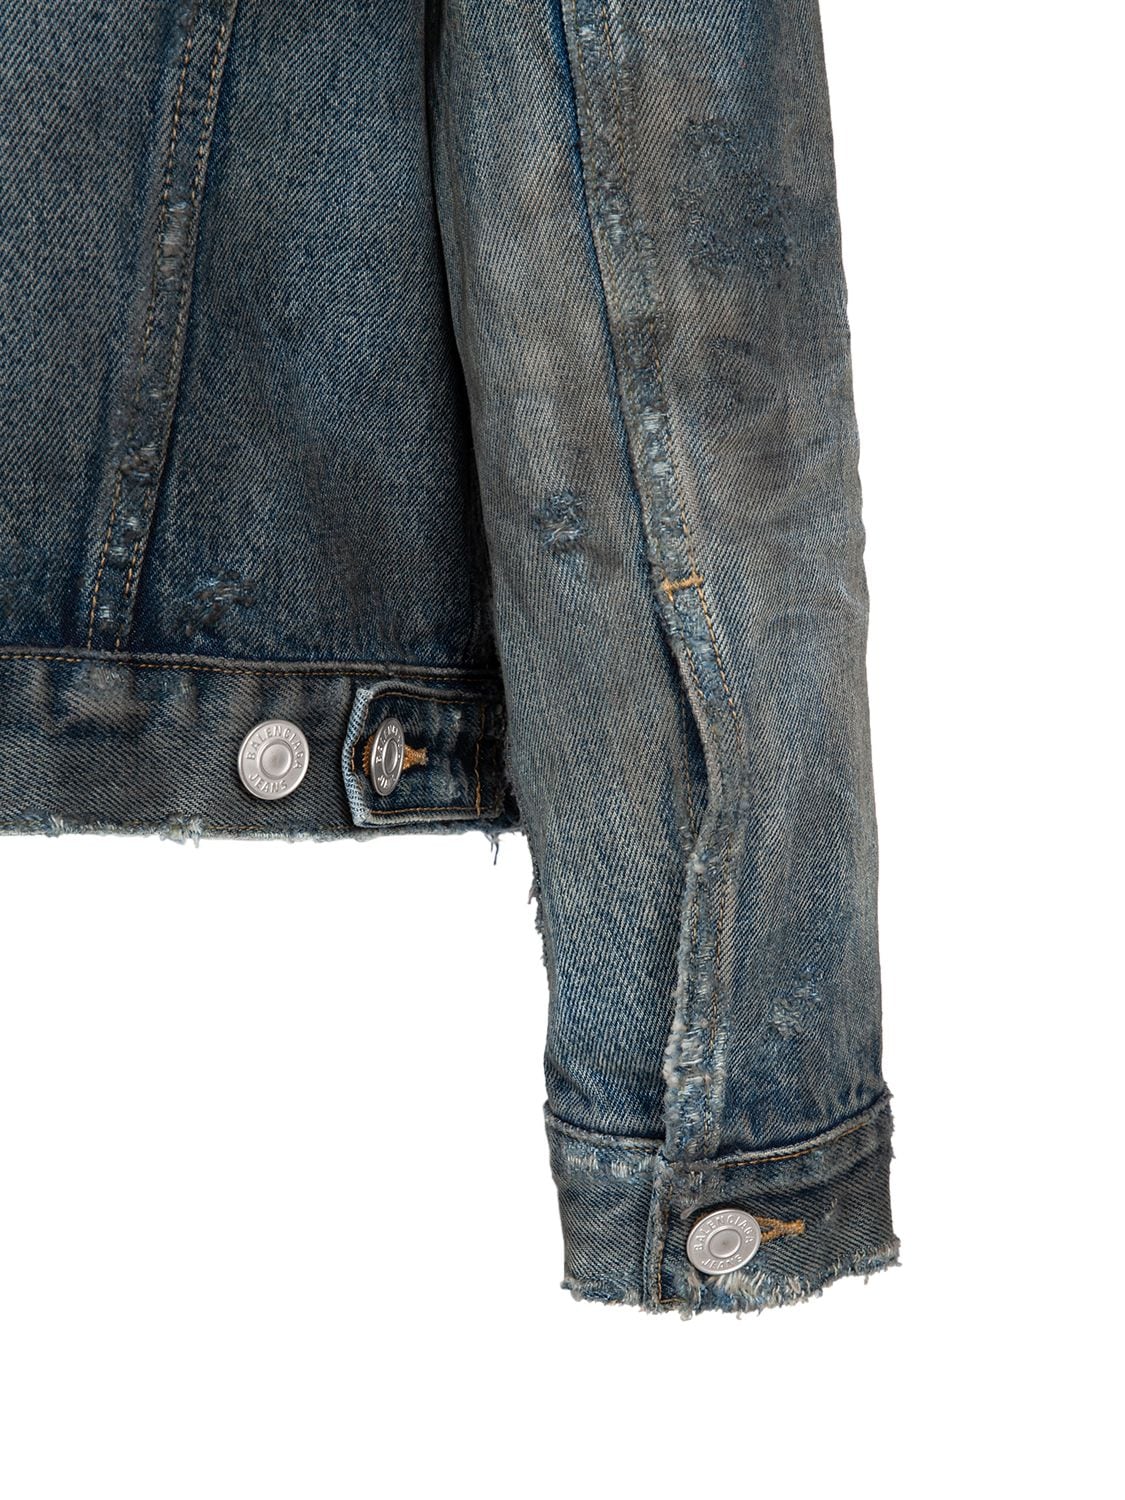 Shop Balenciaga Shrunk Denim Jacket In Dirty Pale Blue